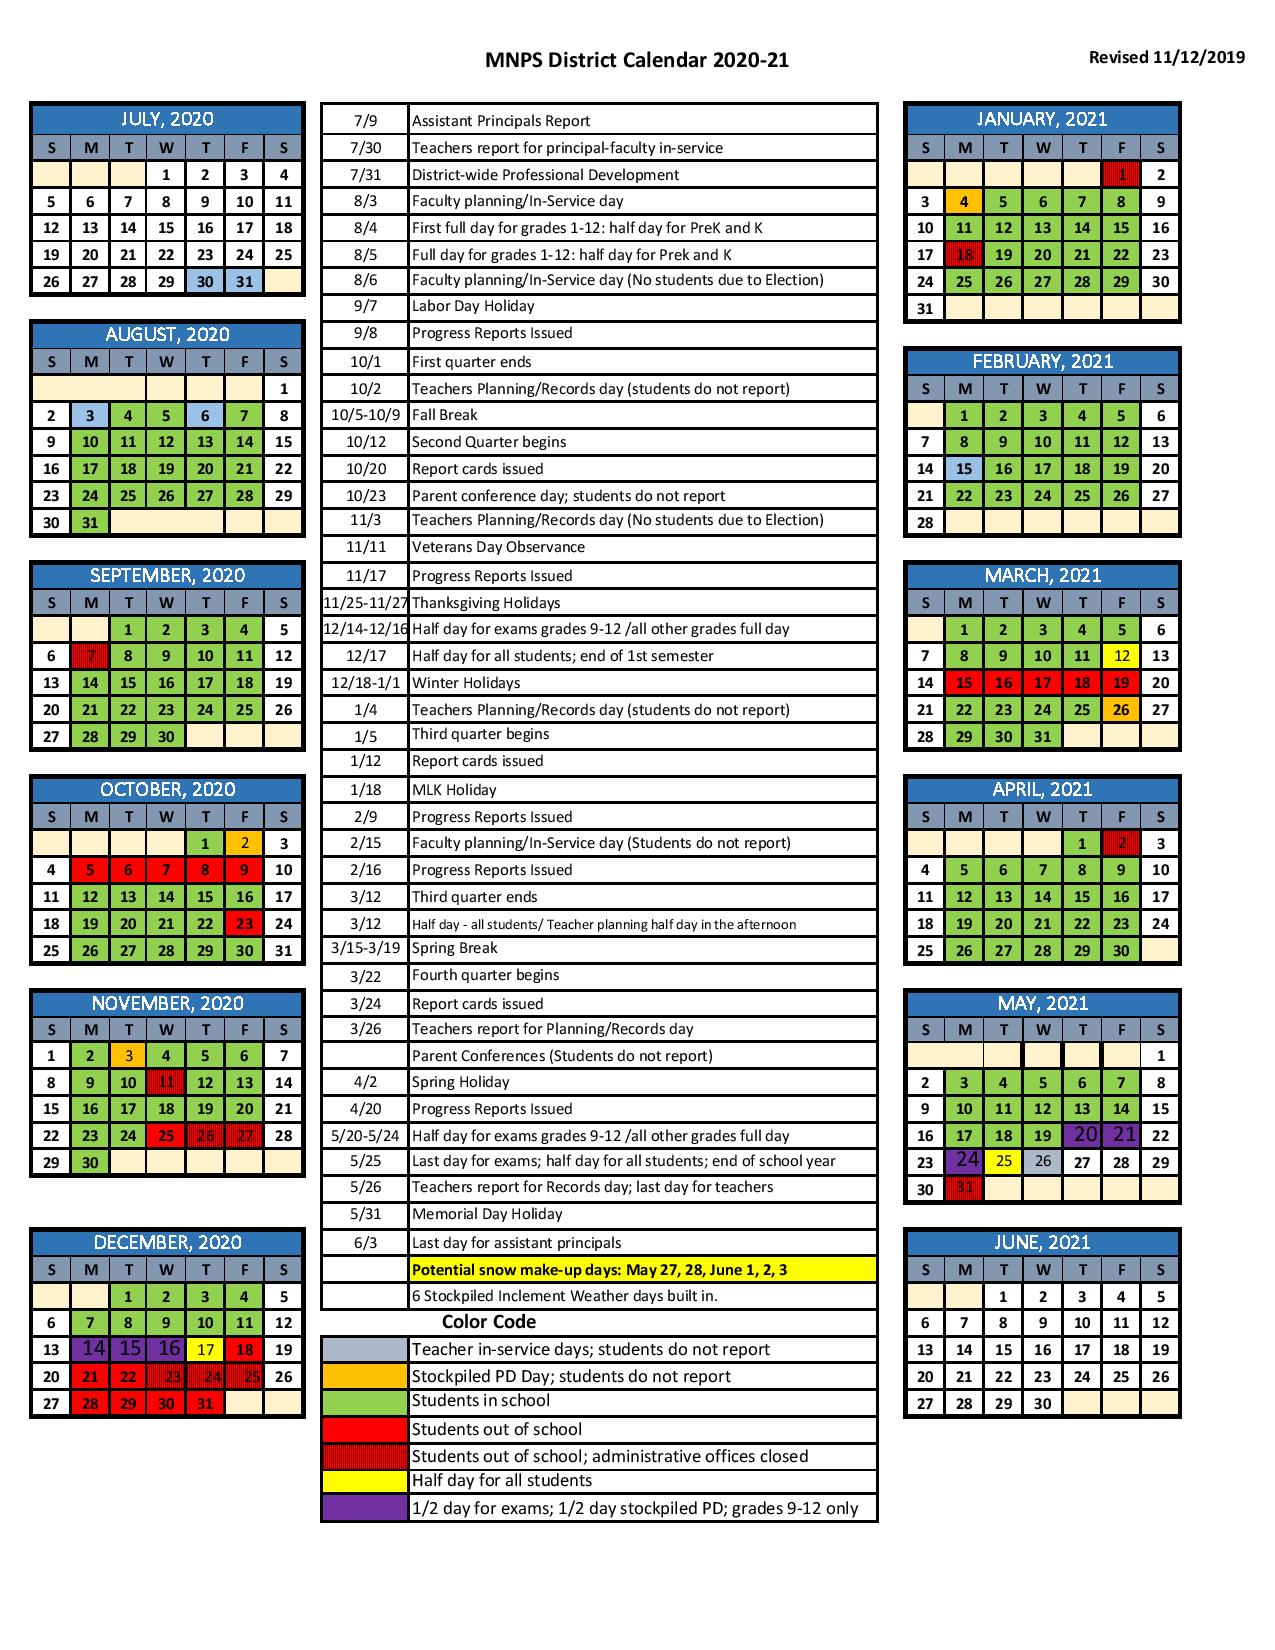 Mtsu Academic Calendar 2022 2023 Metro Nashville Public Schools Calendar 2020-2021